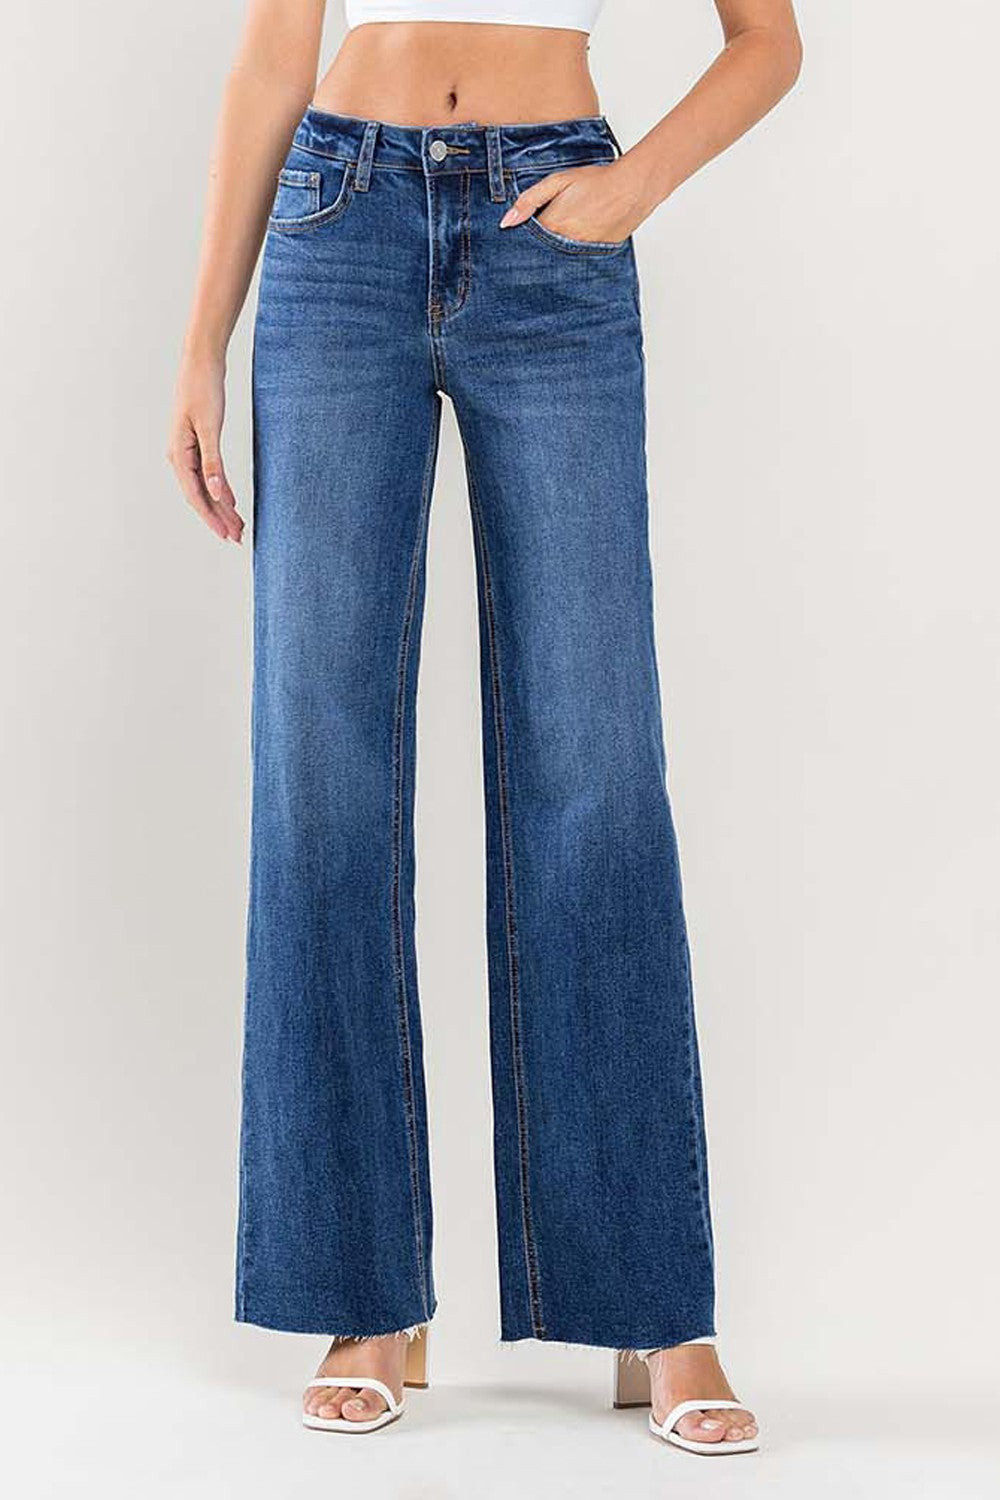 Lovervet High Rise Clean Cut Raw Hem Wide Jeans